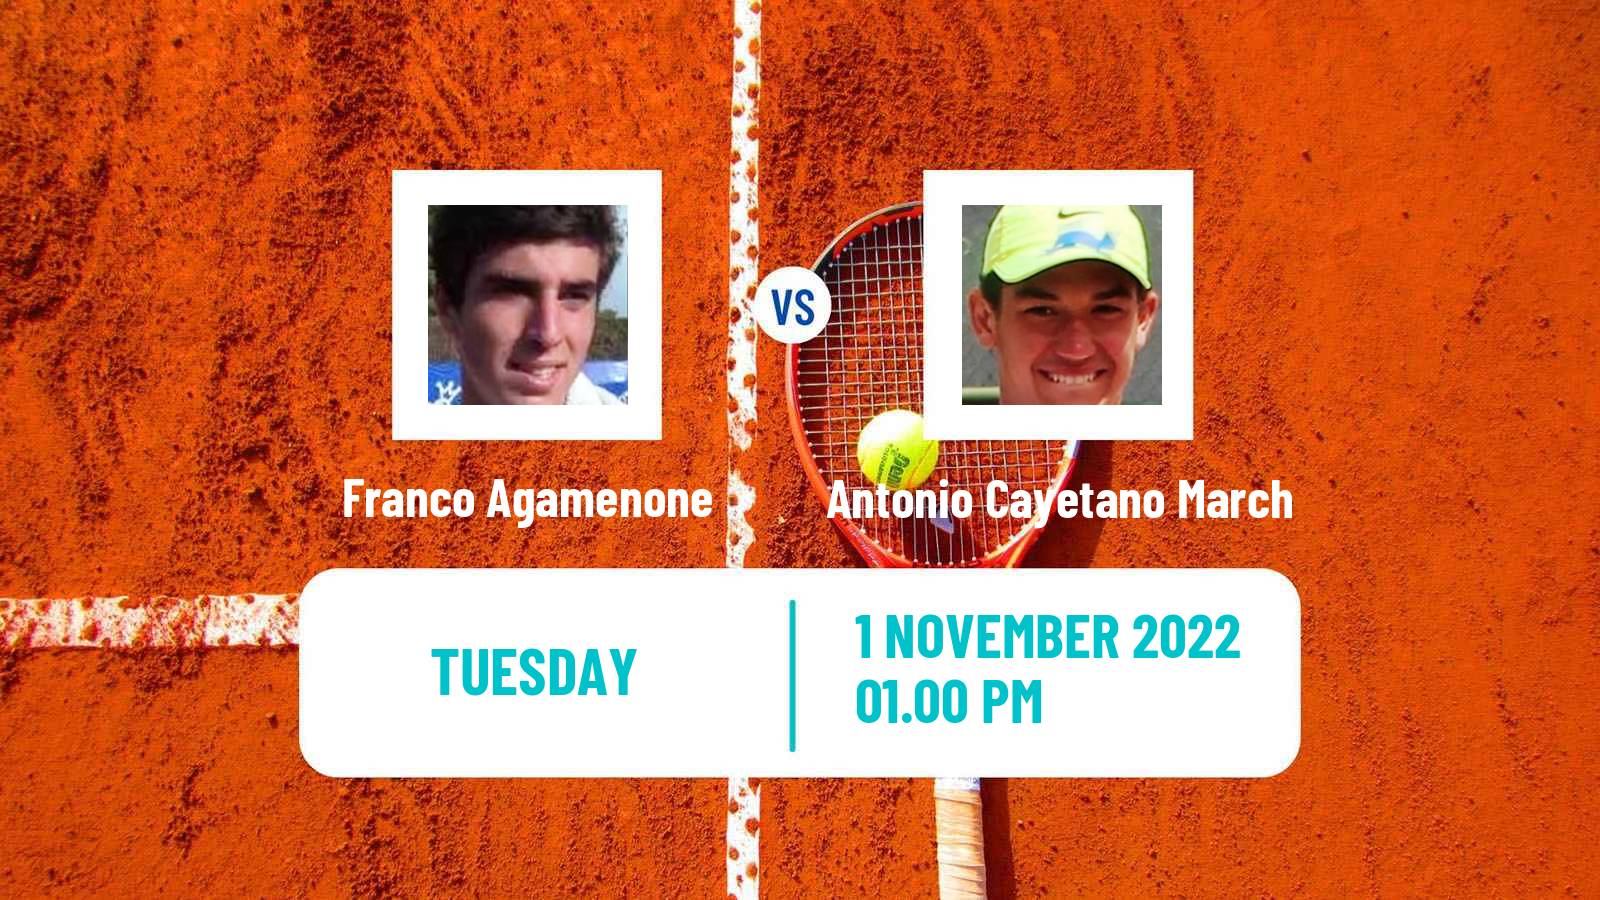 Tennis ATP Challenger Franco Agamenone - Antonio Cayetano March